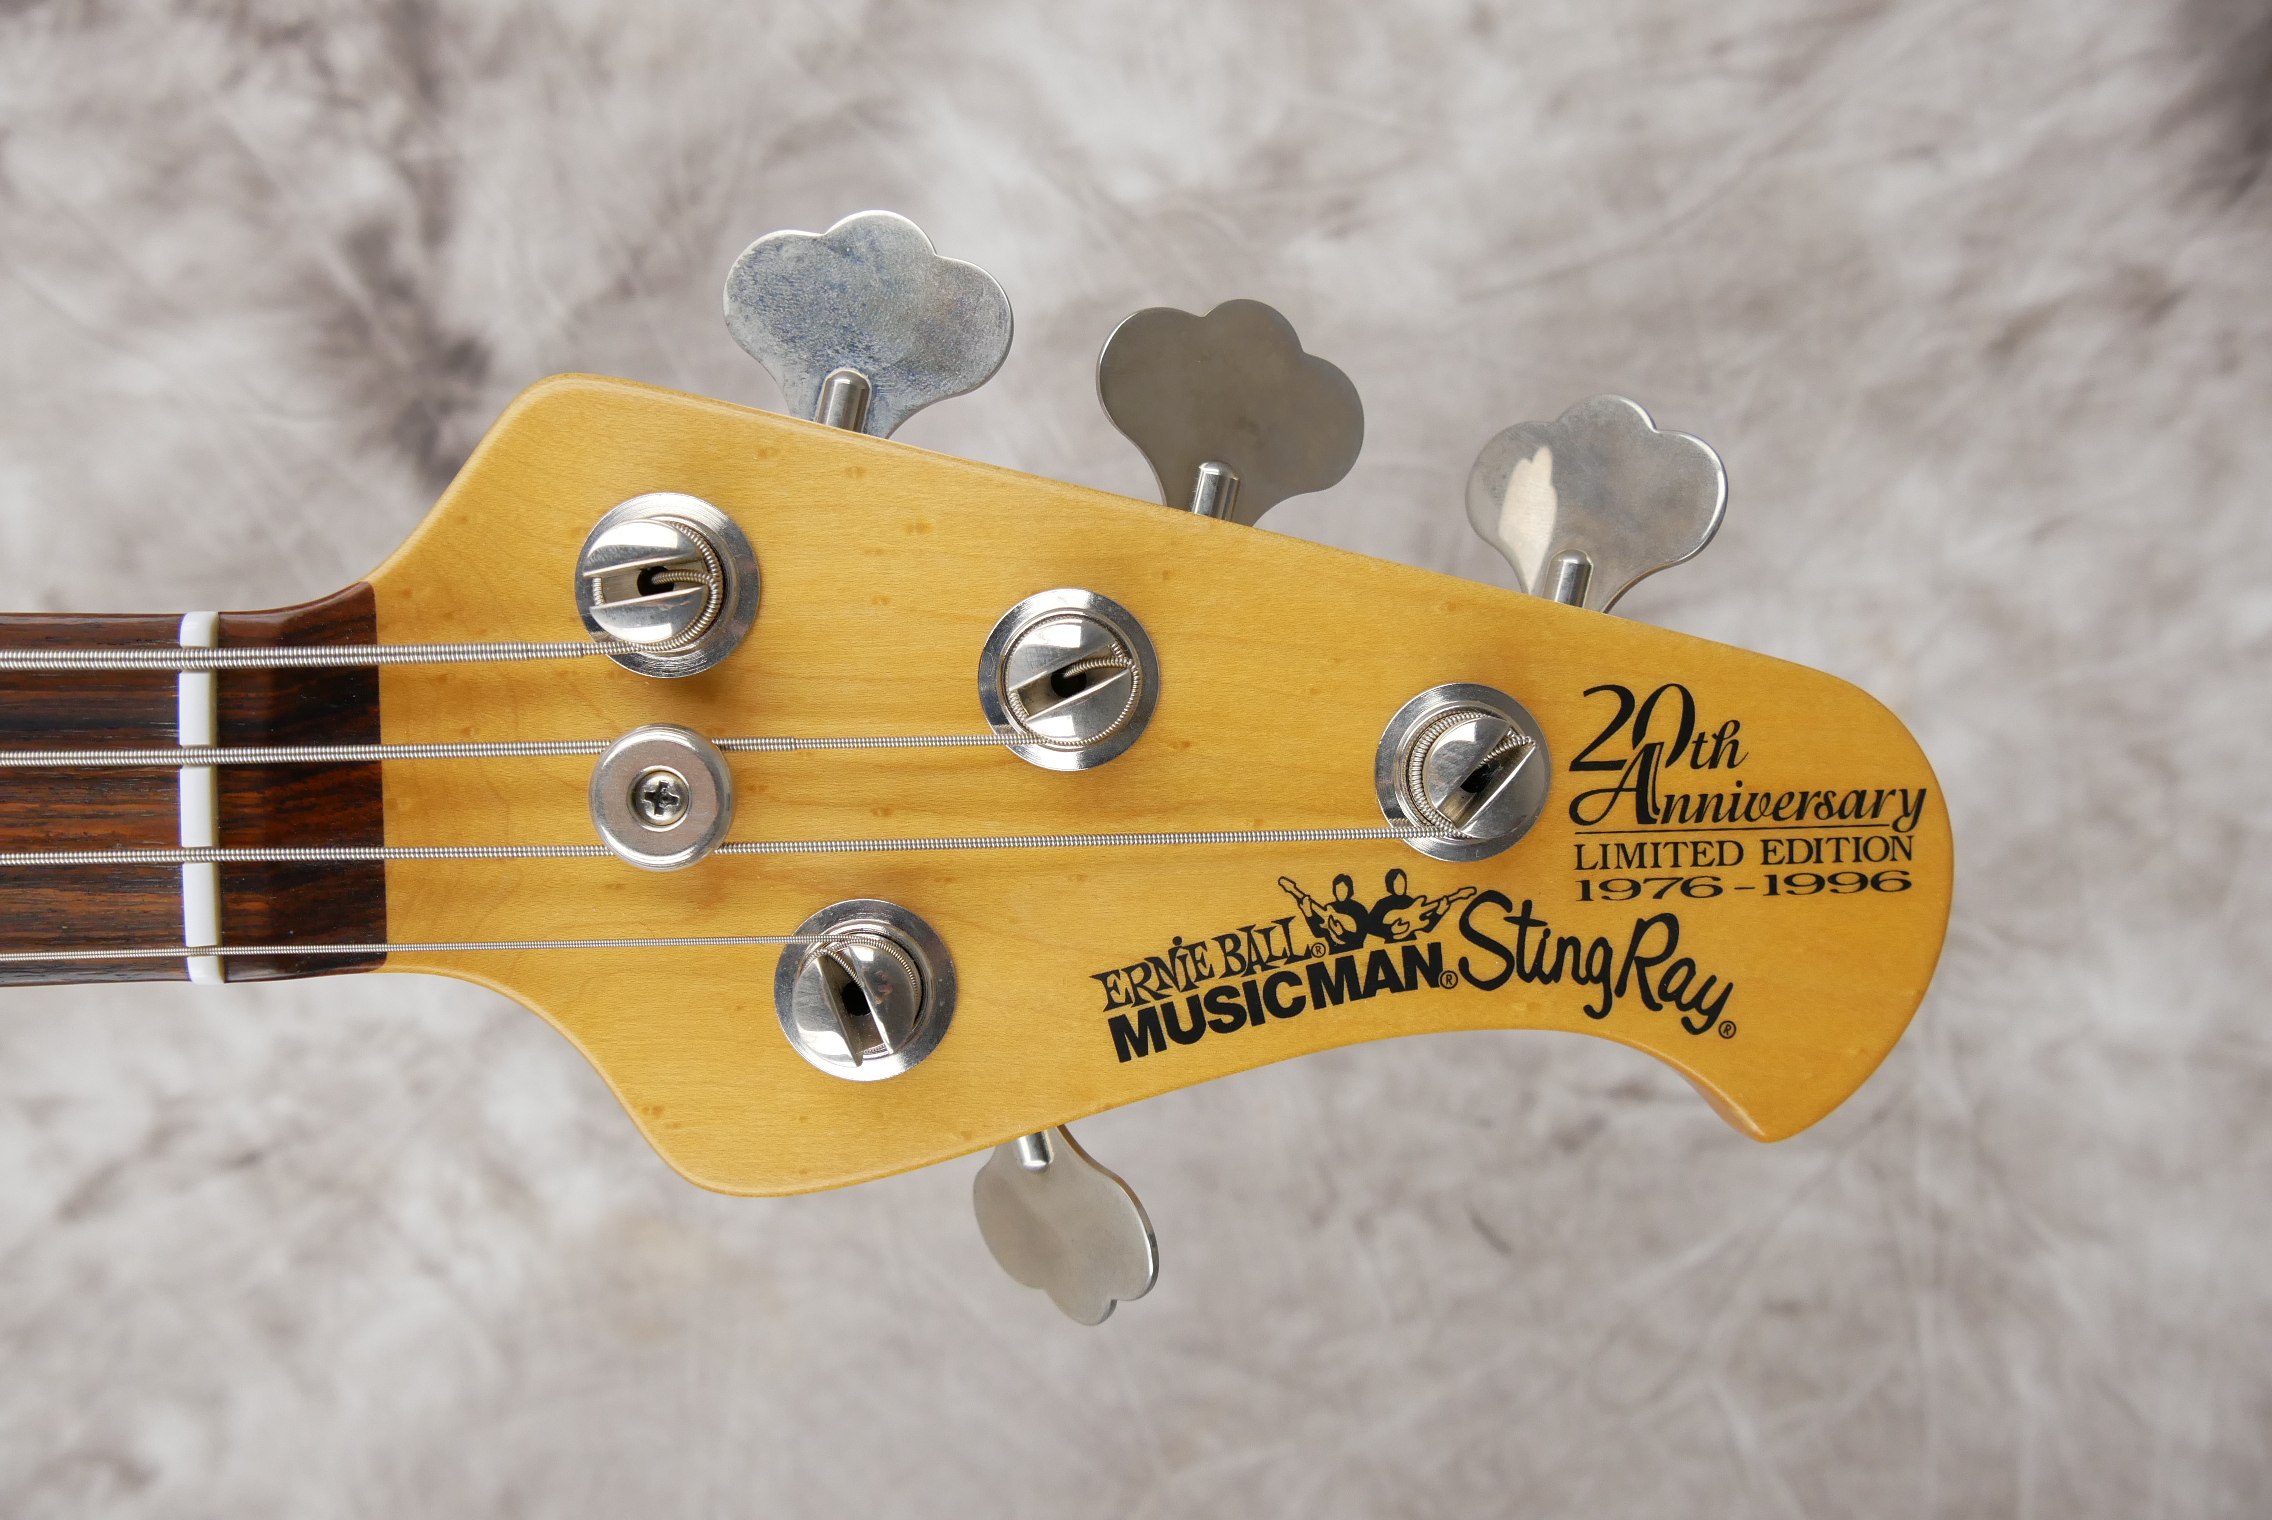 Musicman-Stingray-20th-Anniversary-limited-edition-009.JPG